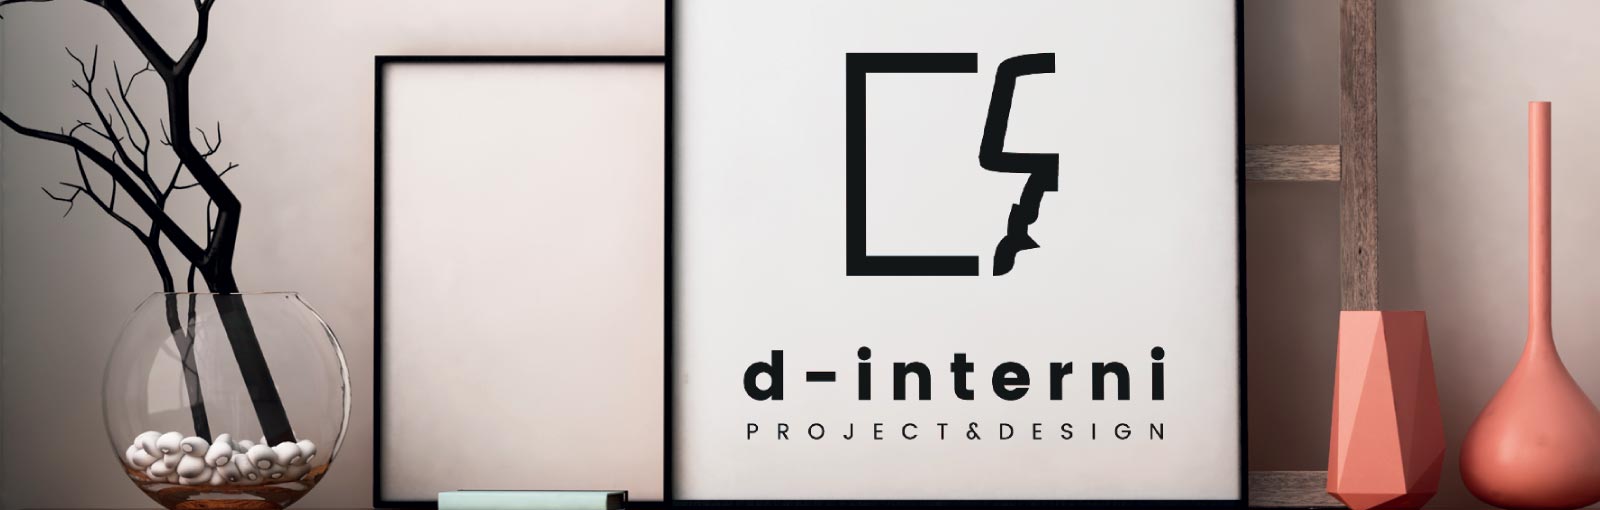 Logo D'interni